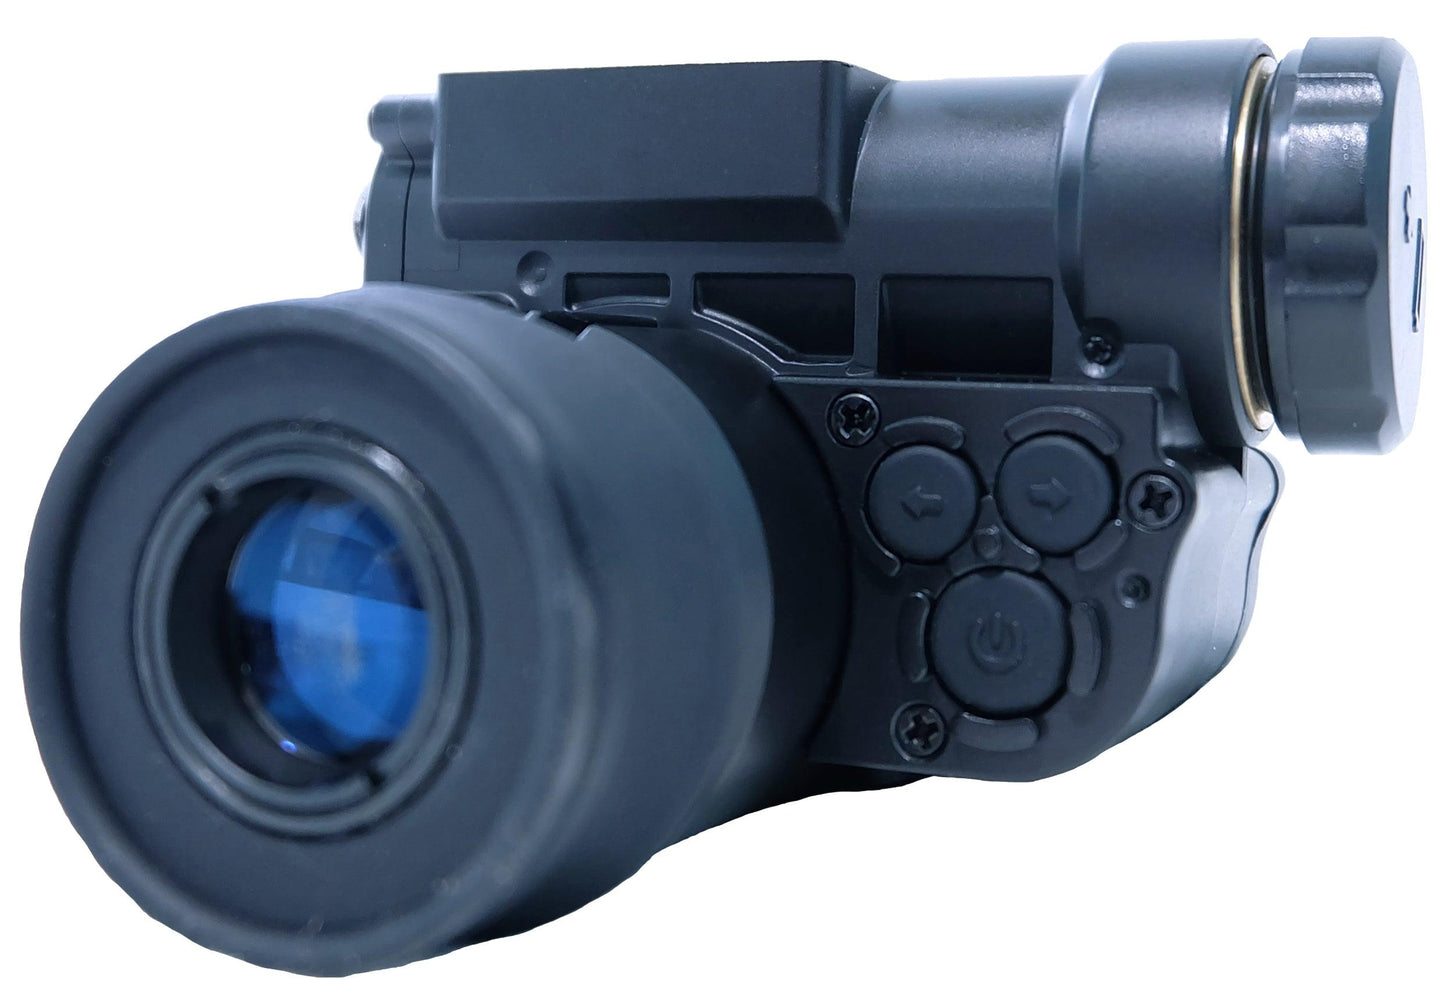 Luna Optics Digital Tactical Day-Night Vision Monocular LN-DTM1 - NVU